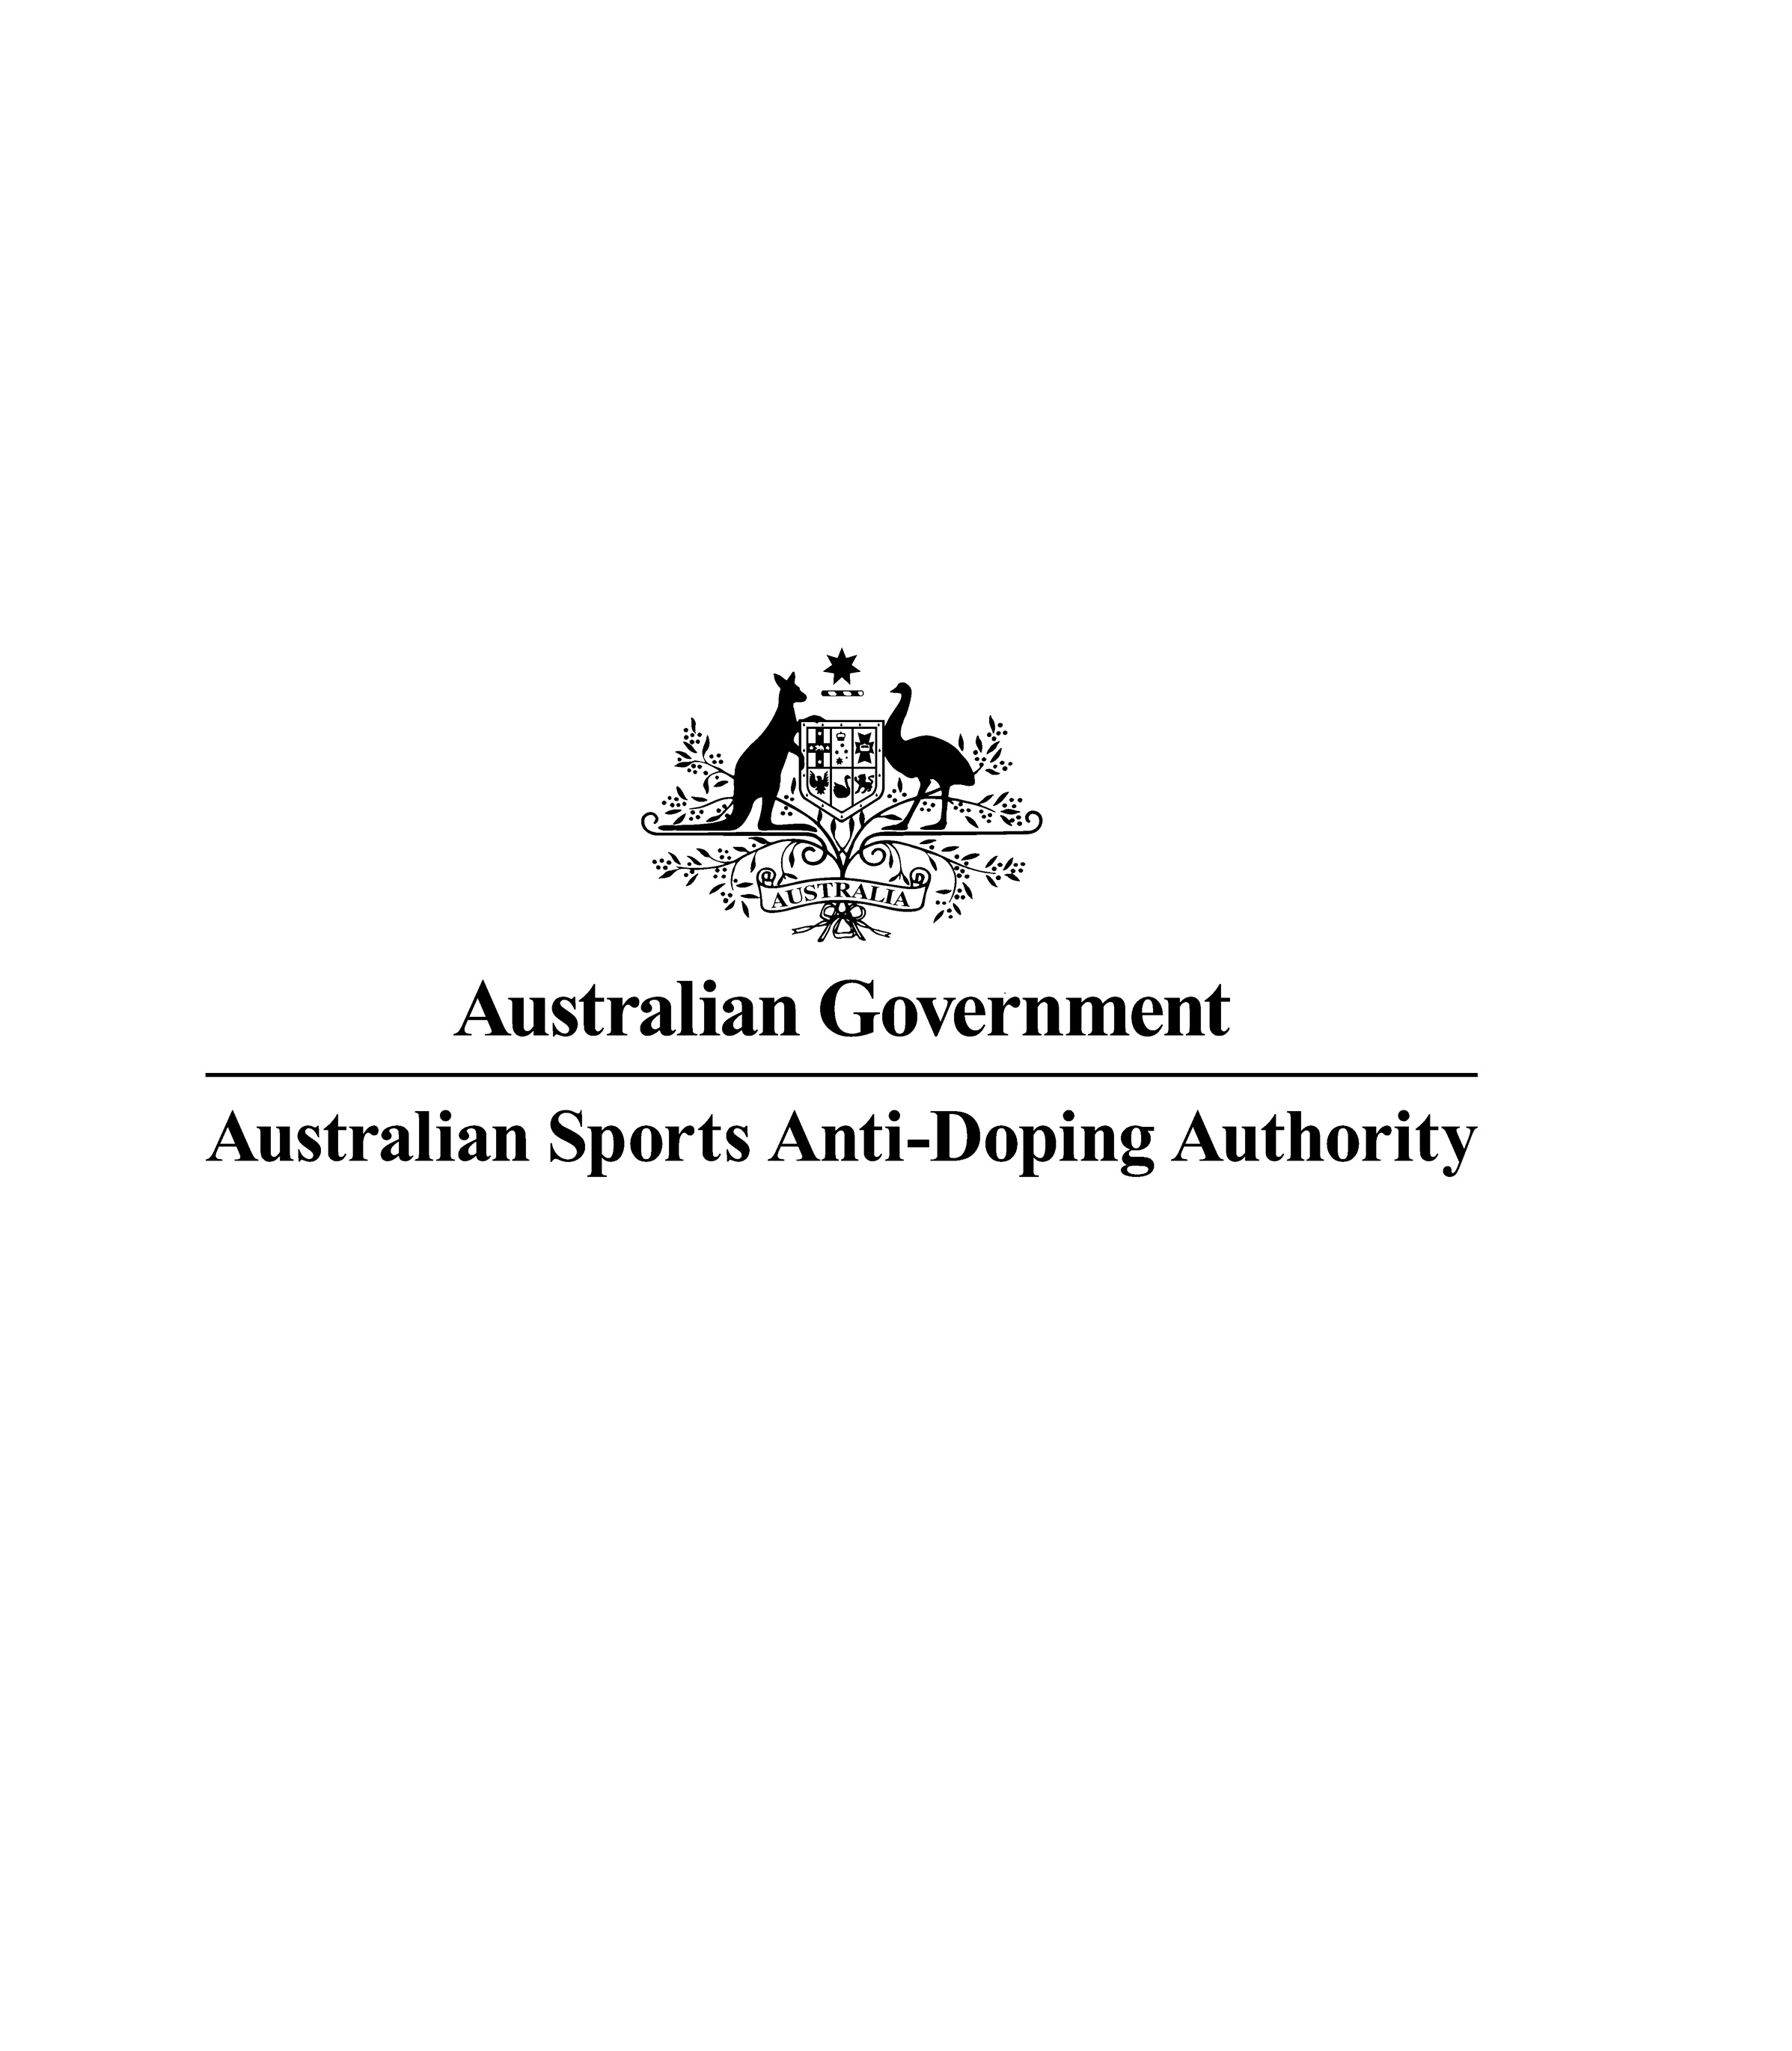 Black and White Sports Authority Logo - Australian Sports Anti-Doping Authority - Gippsland Sports Academy